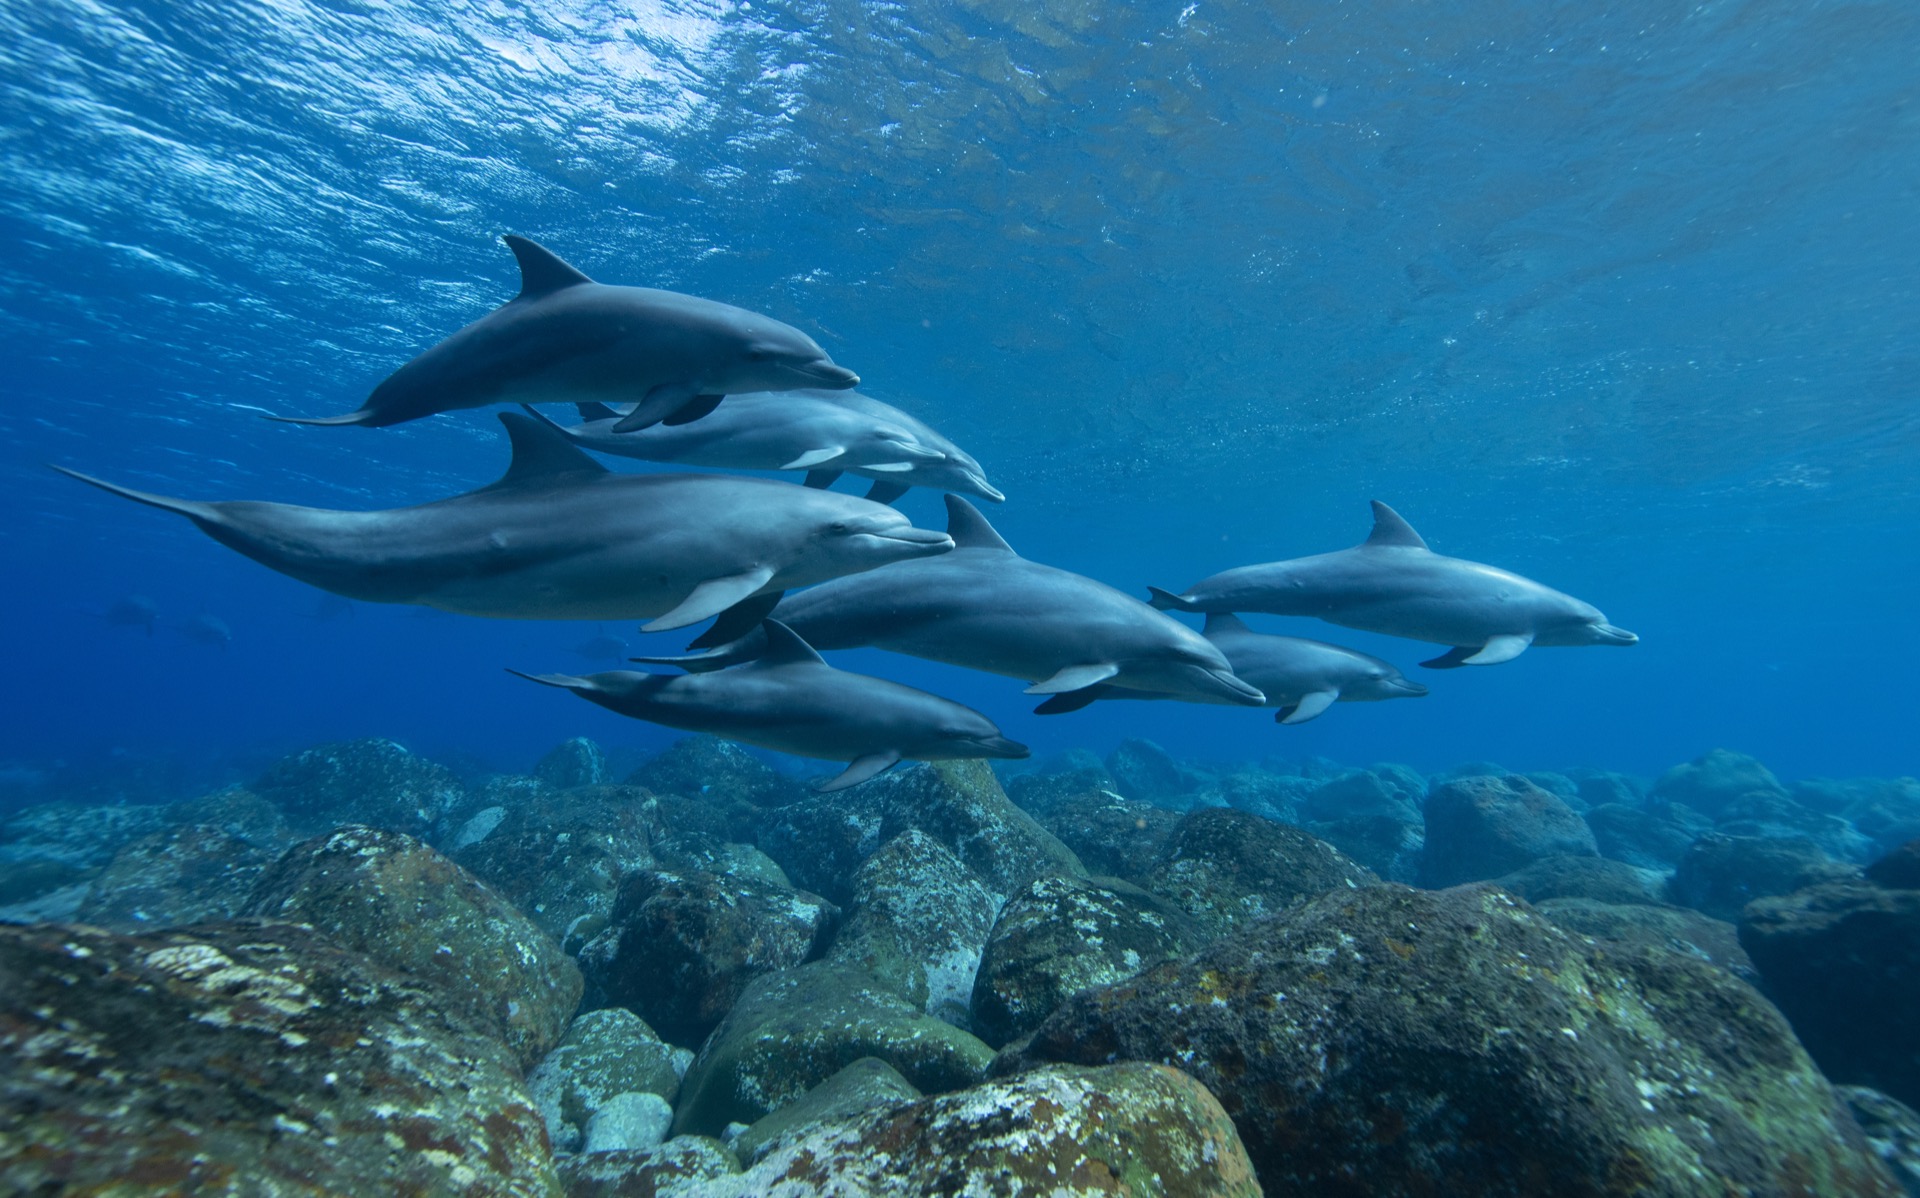 Les grands dauphins sont des organismes sociaux chez lesquels les actes sexuels permettent de renforcer les liens. © Toshiharu Arakawa, Adobe Stock